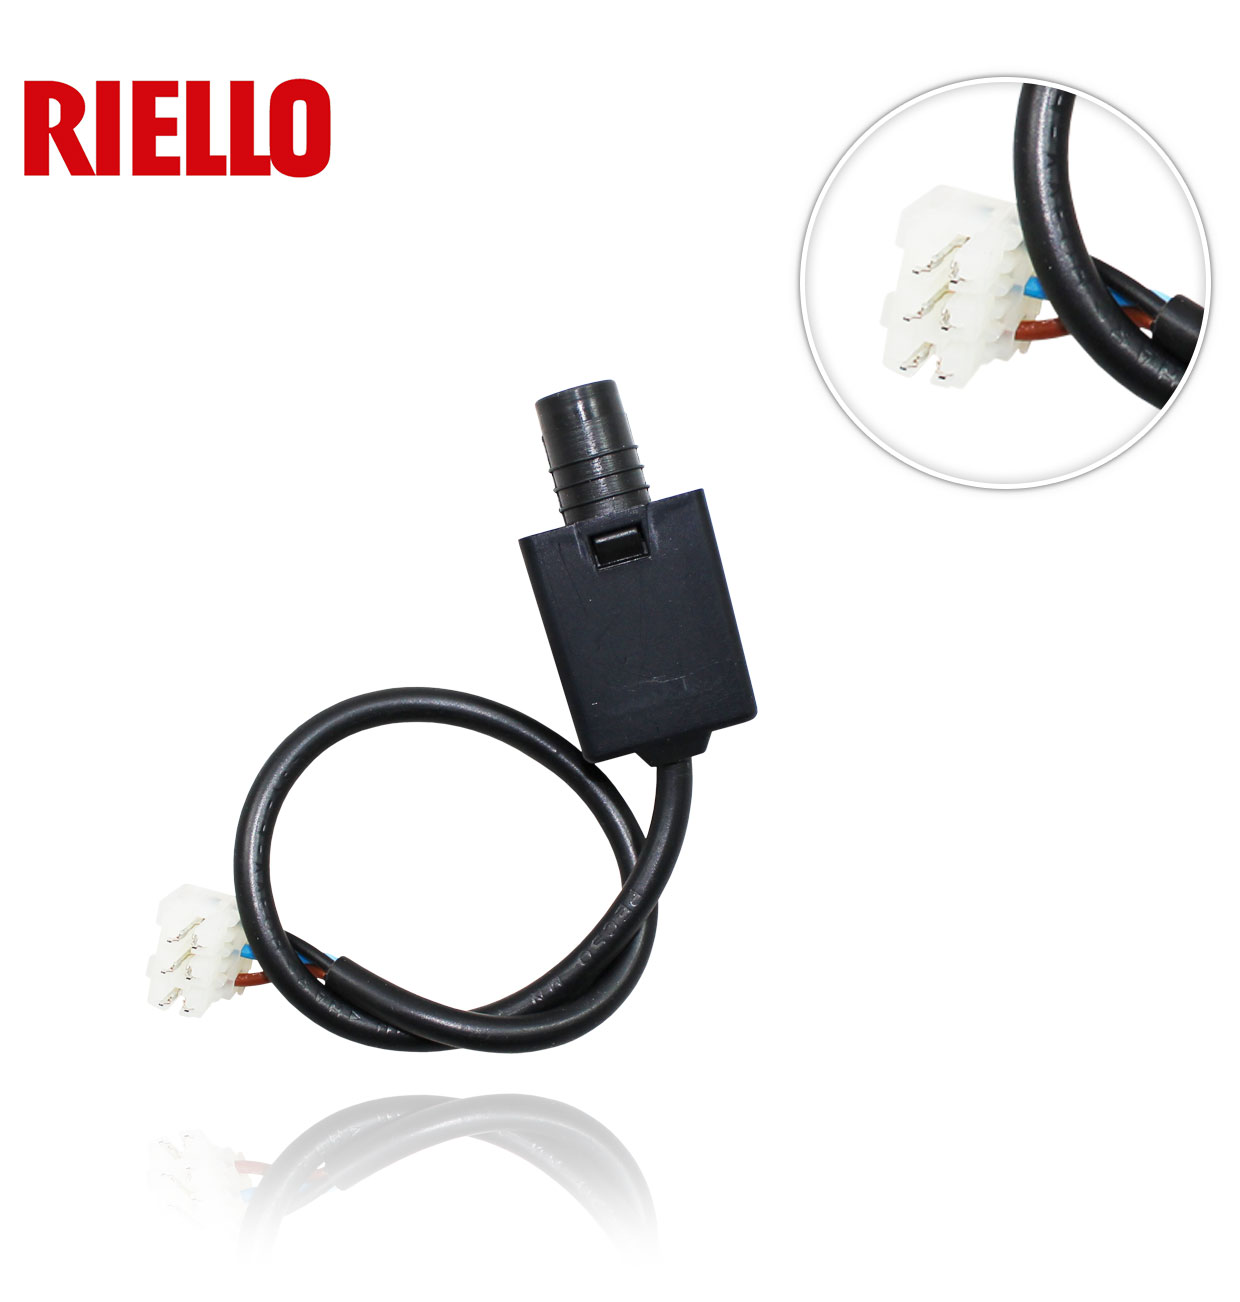 RIELLO/ROCA 3007492 C IRD 1010 R CELL with special connector